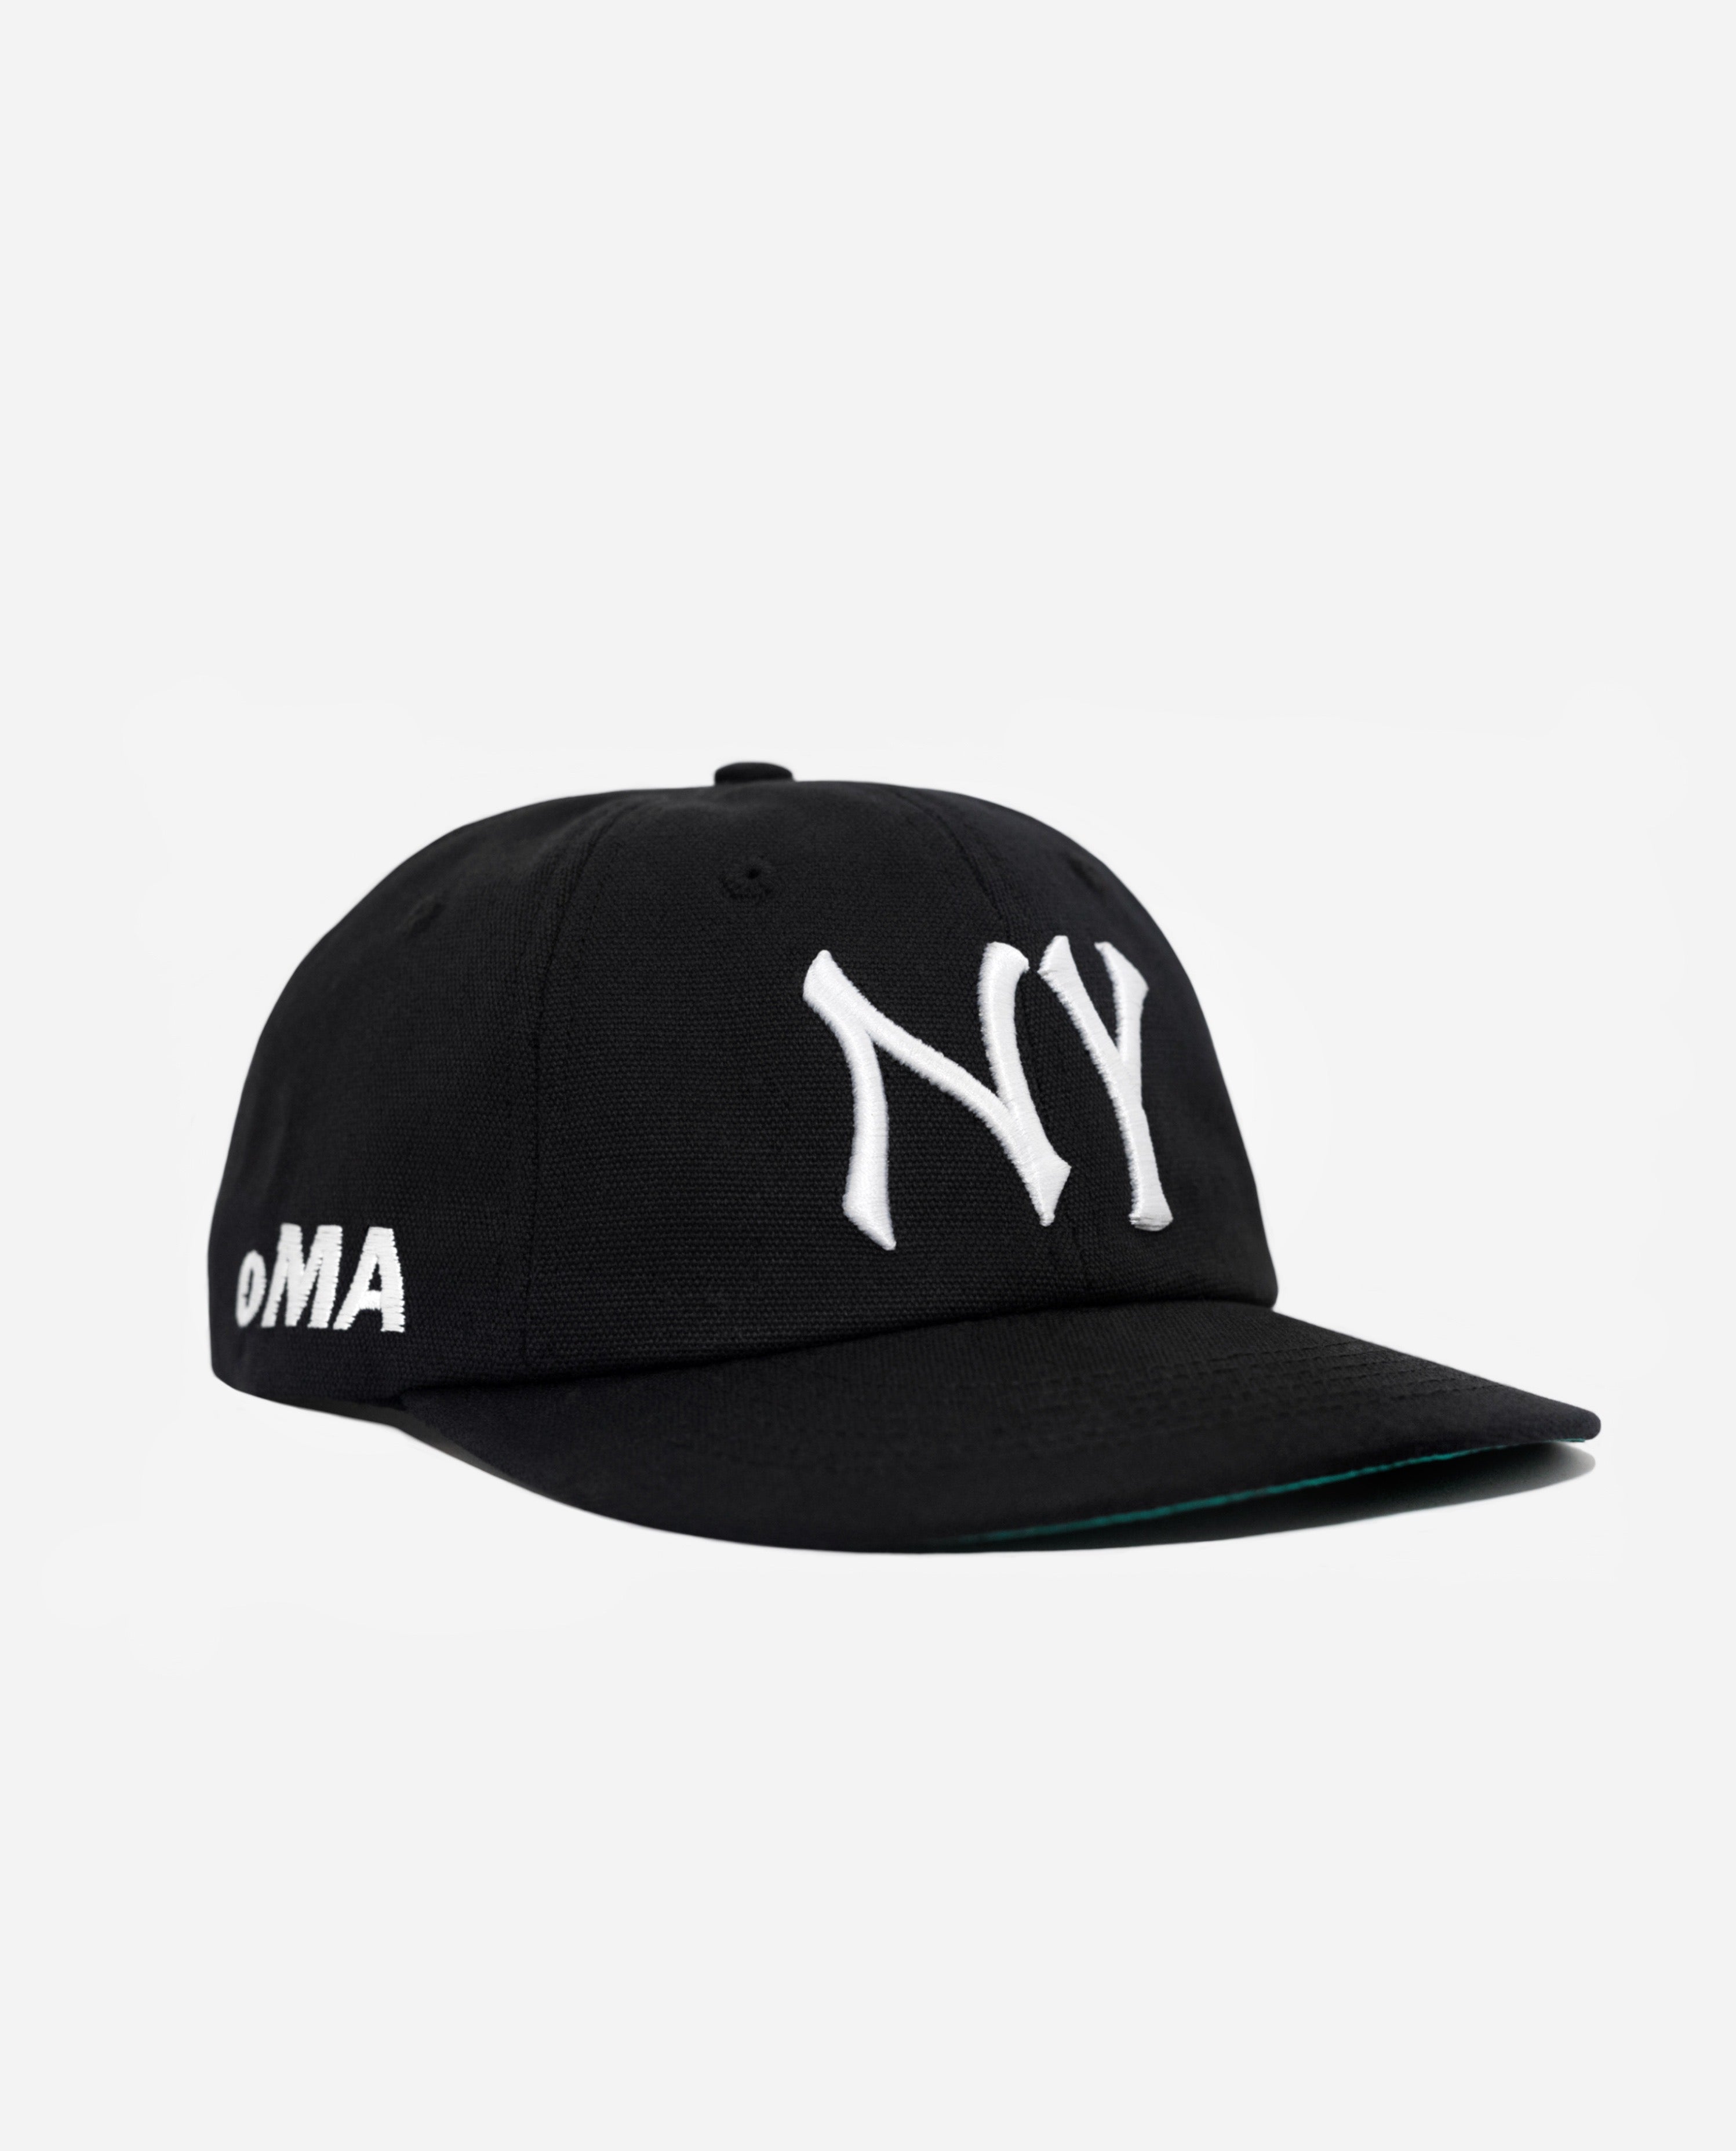 oMA NEW YORK HAT (BLACK/WHITE)